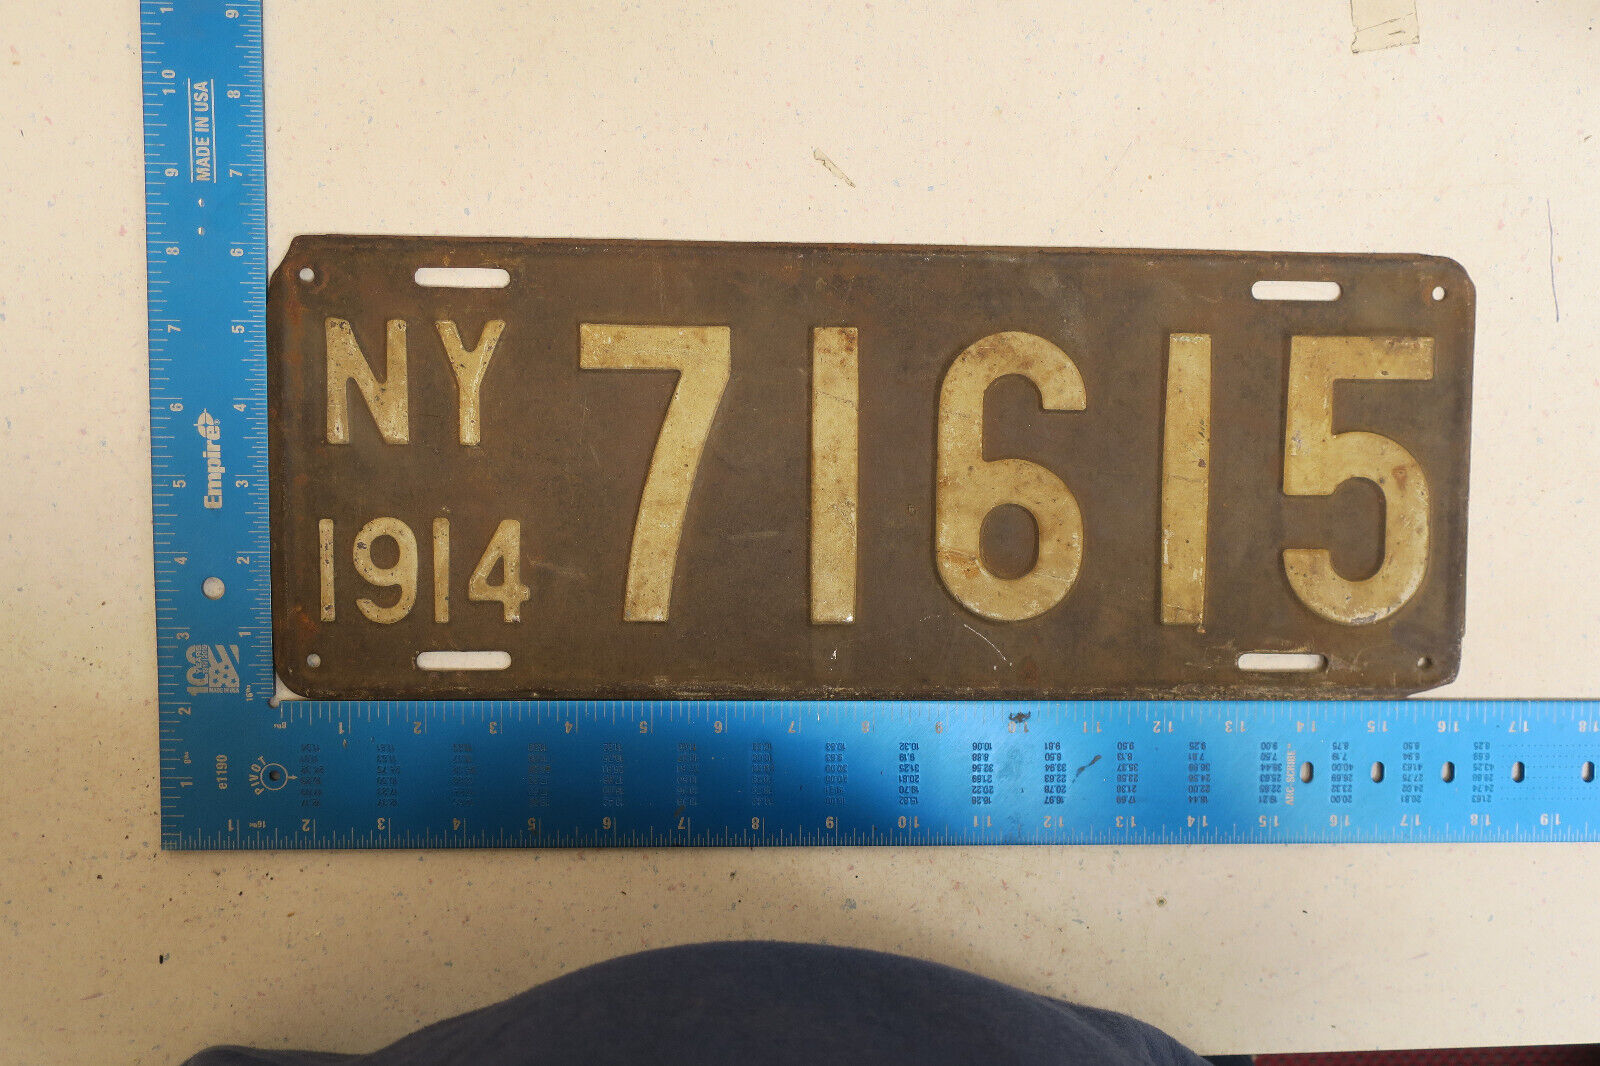 1914 14 NEW YORK NY LICENSE PLATE TAG # 71615